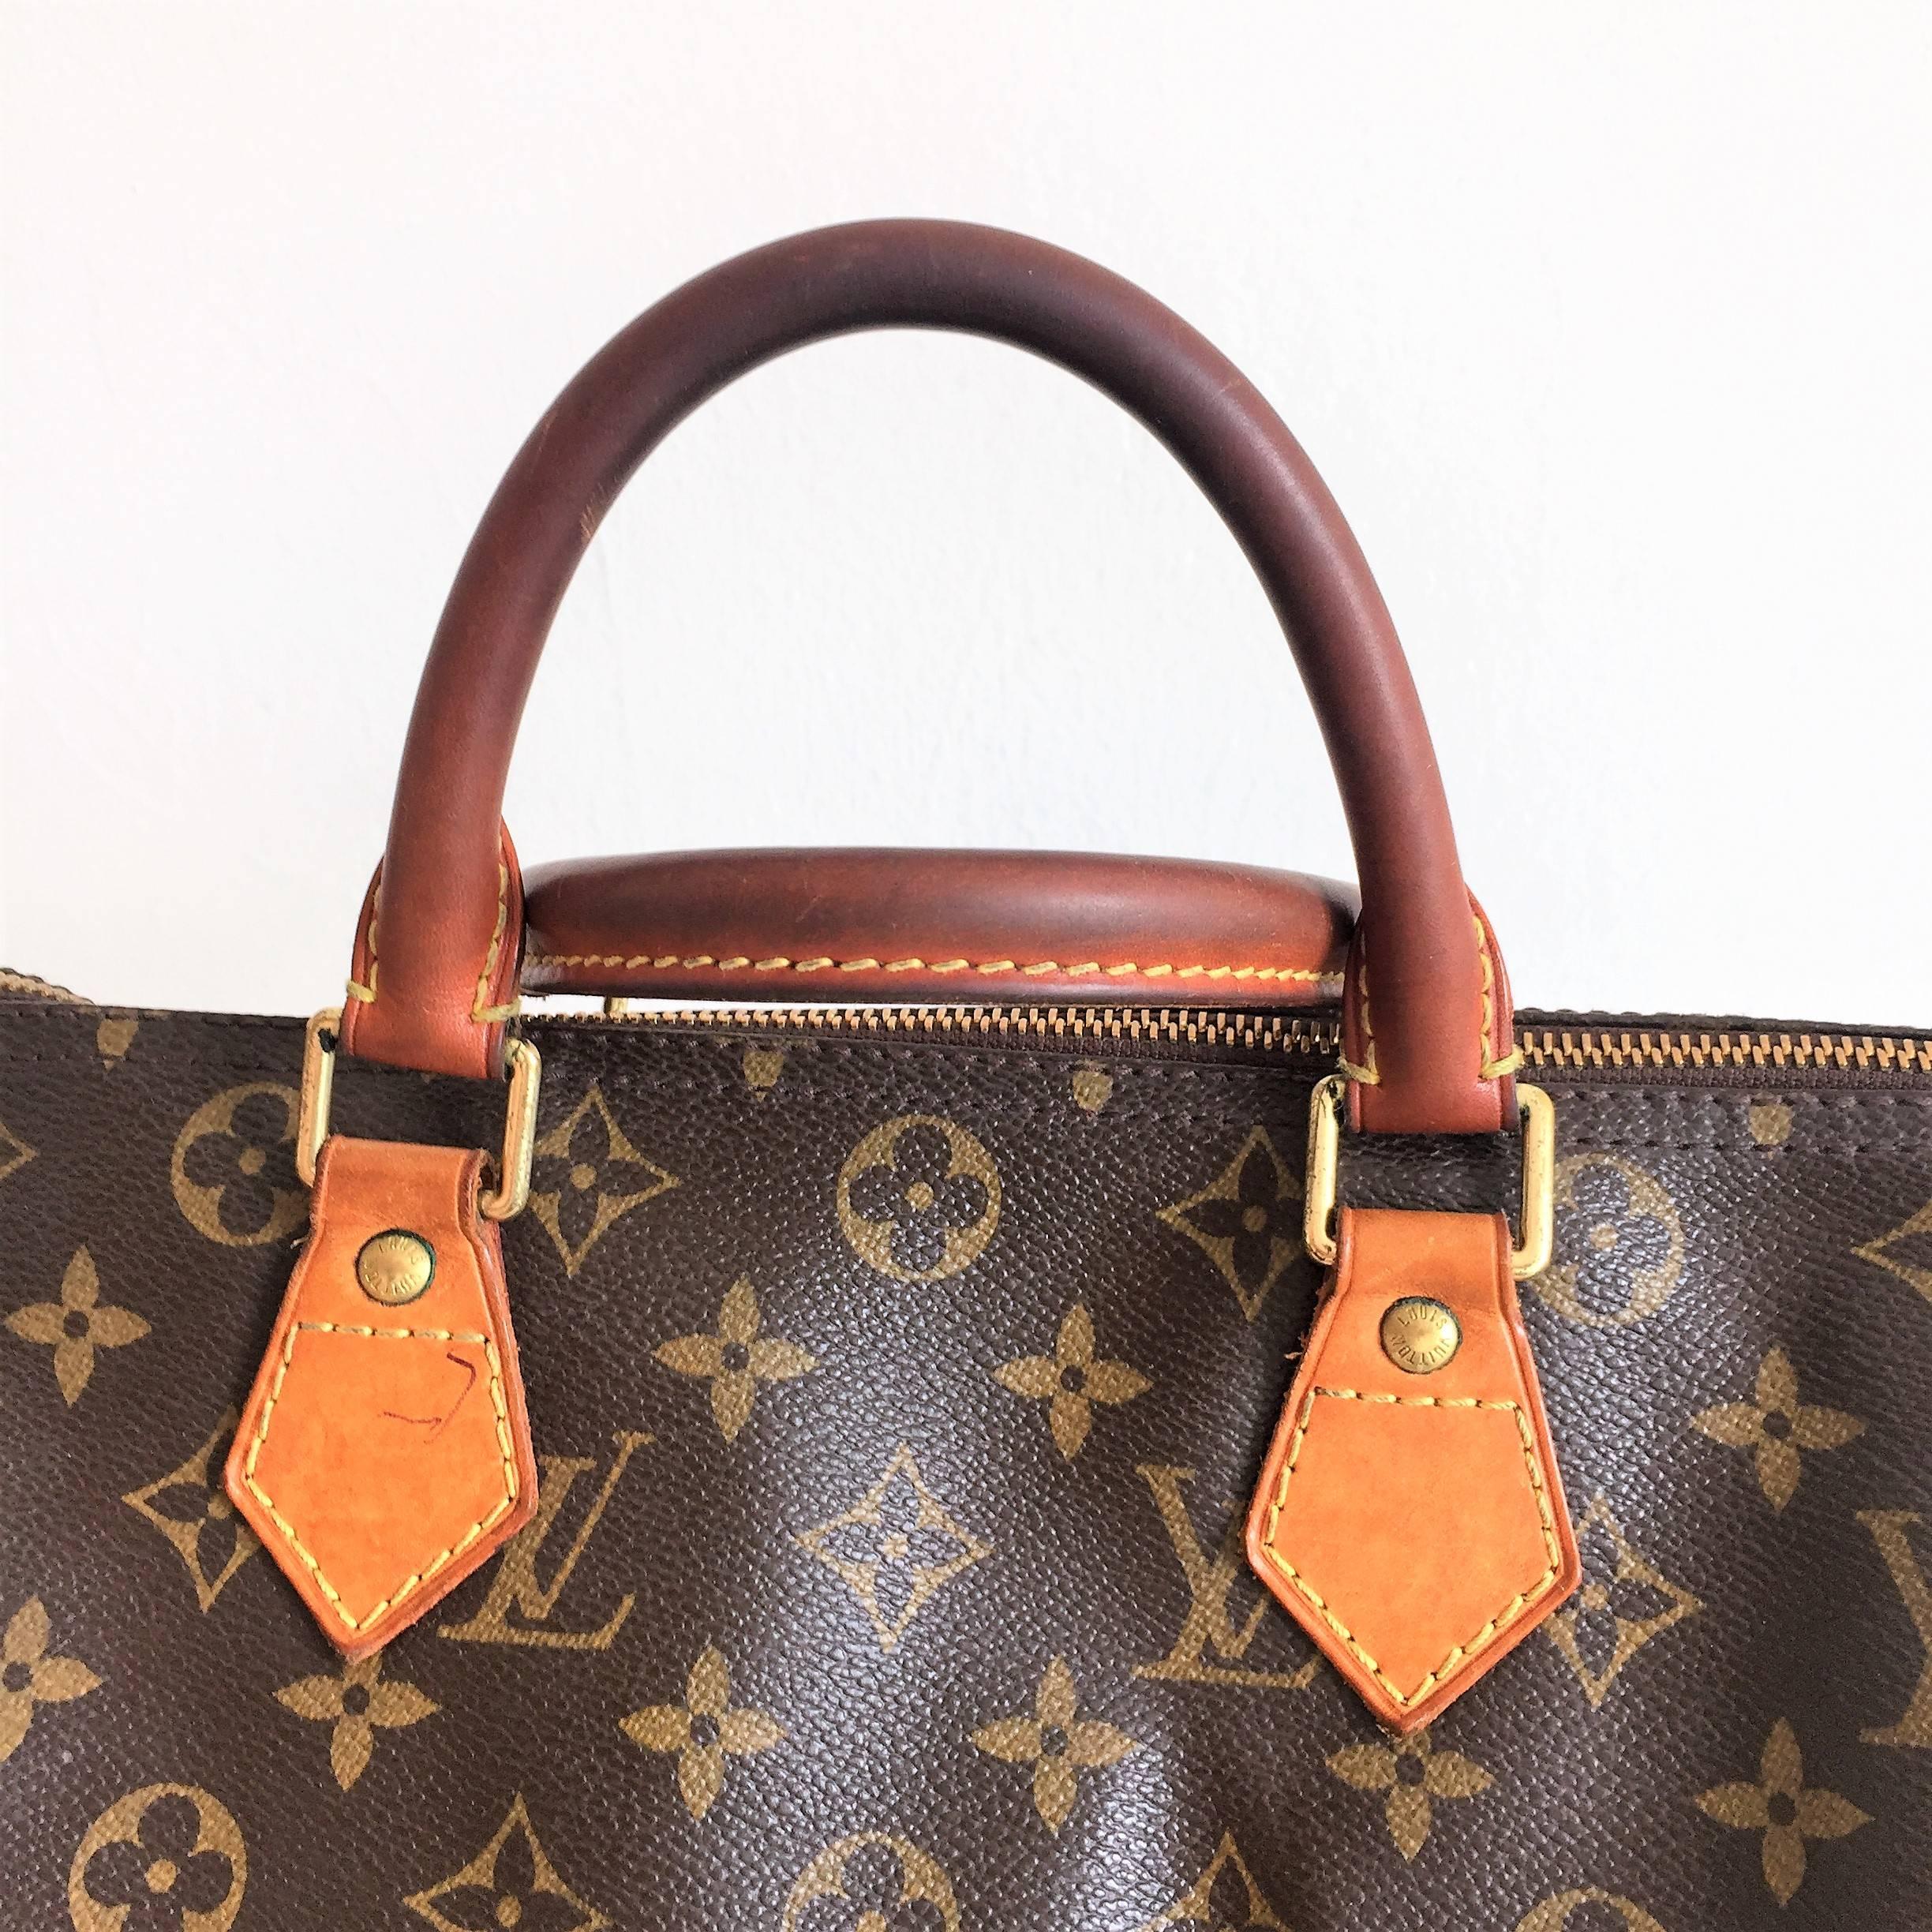 Louis Vuitton Speedy 30 Monogram Handbag Purse For Sale 2